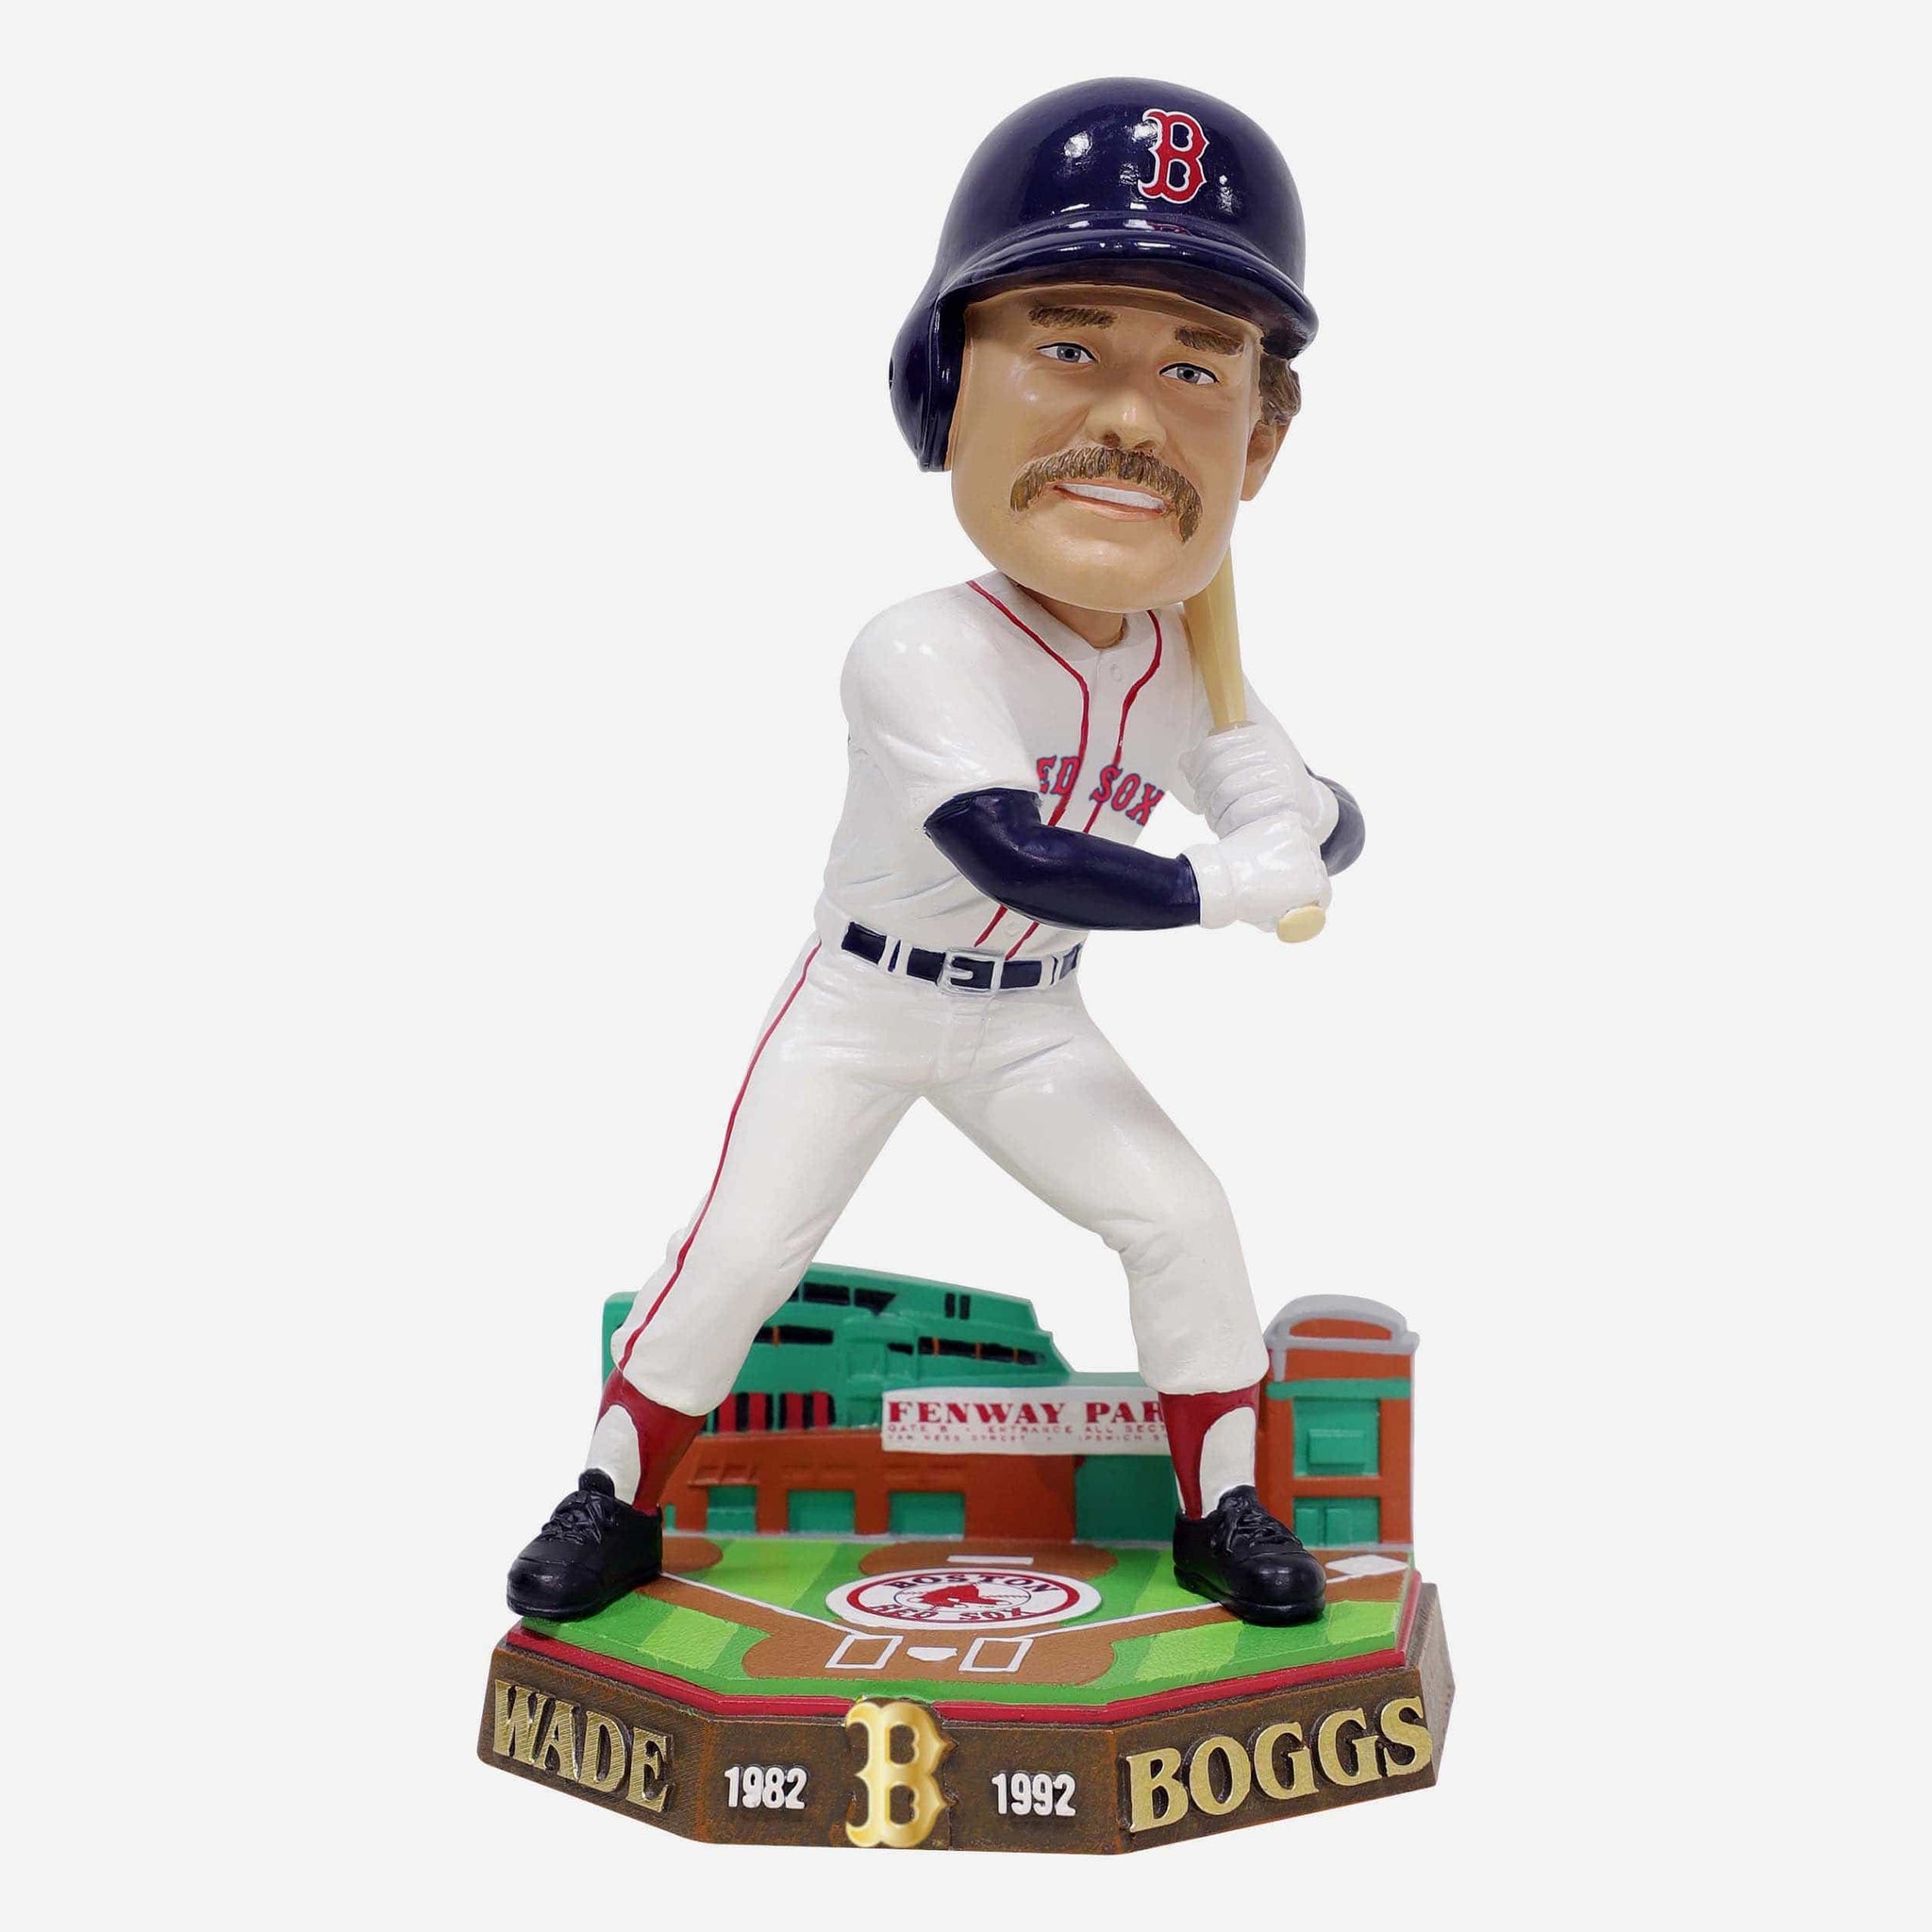 Wade Boggs Boston, Third baseman, Boston Red Sox Tampa Bay Devil